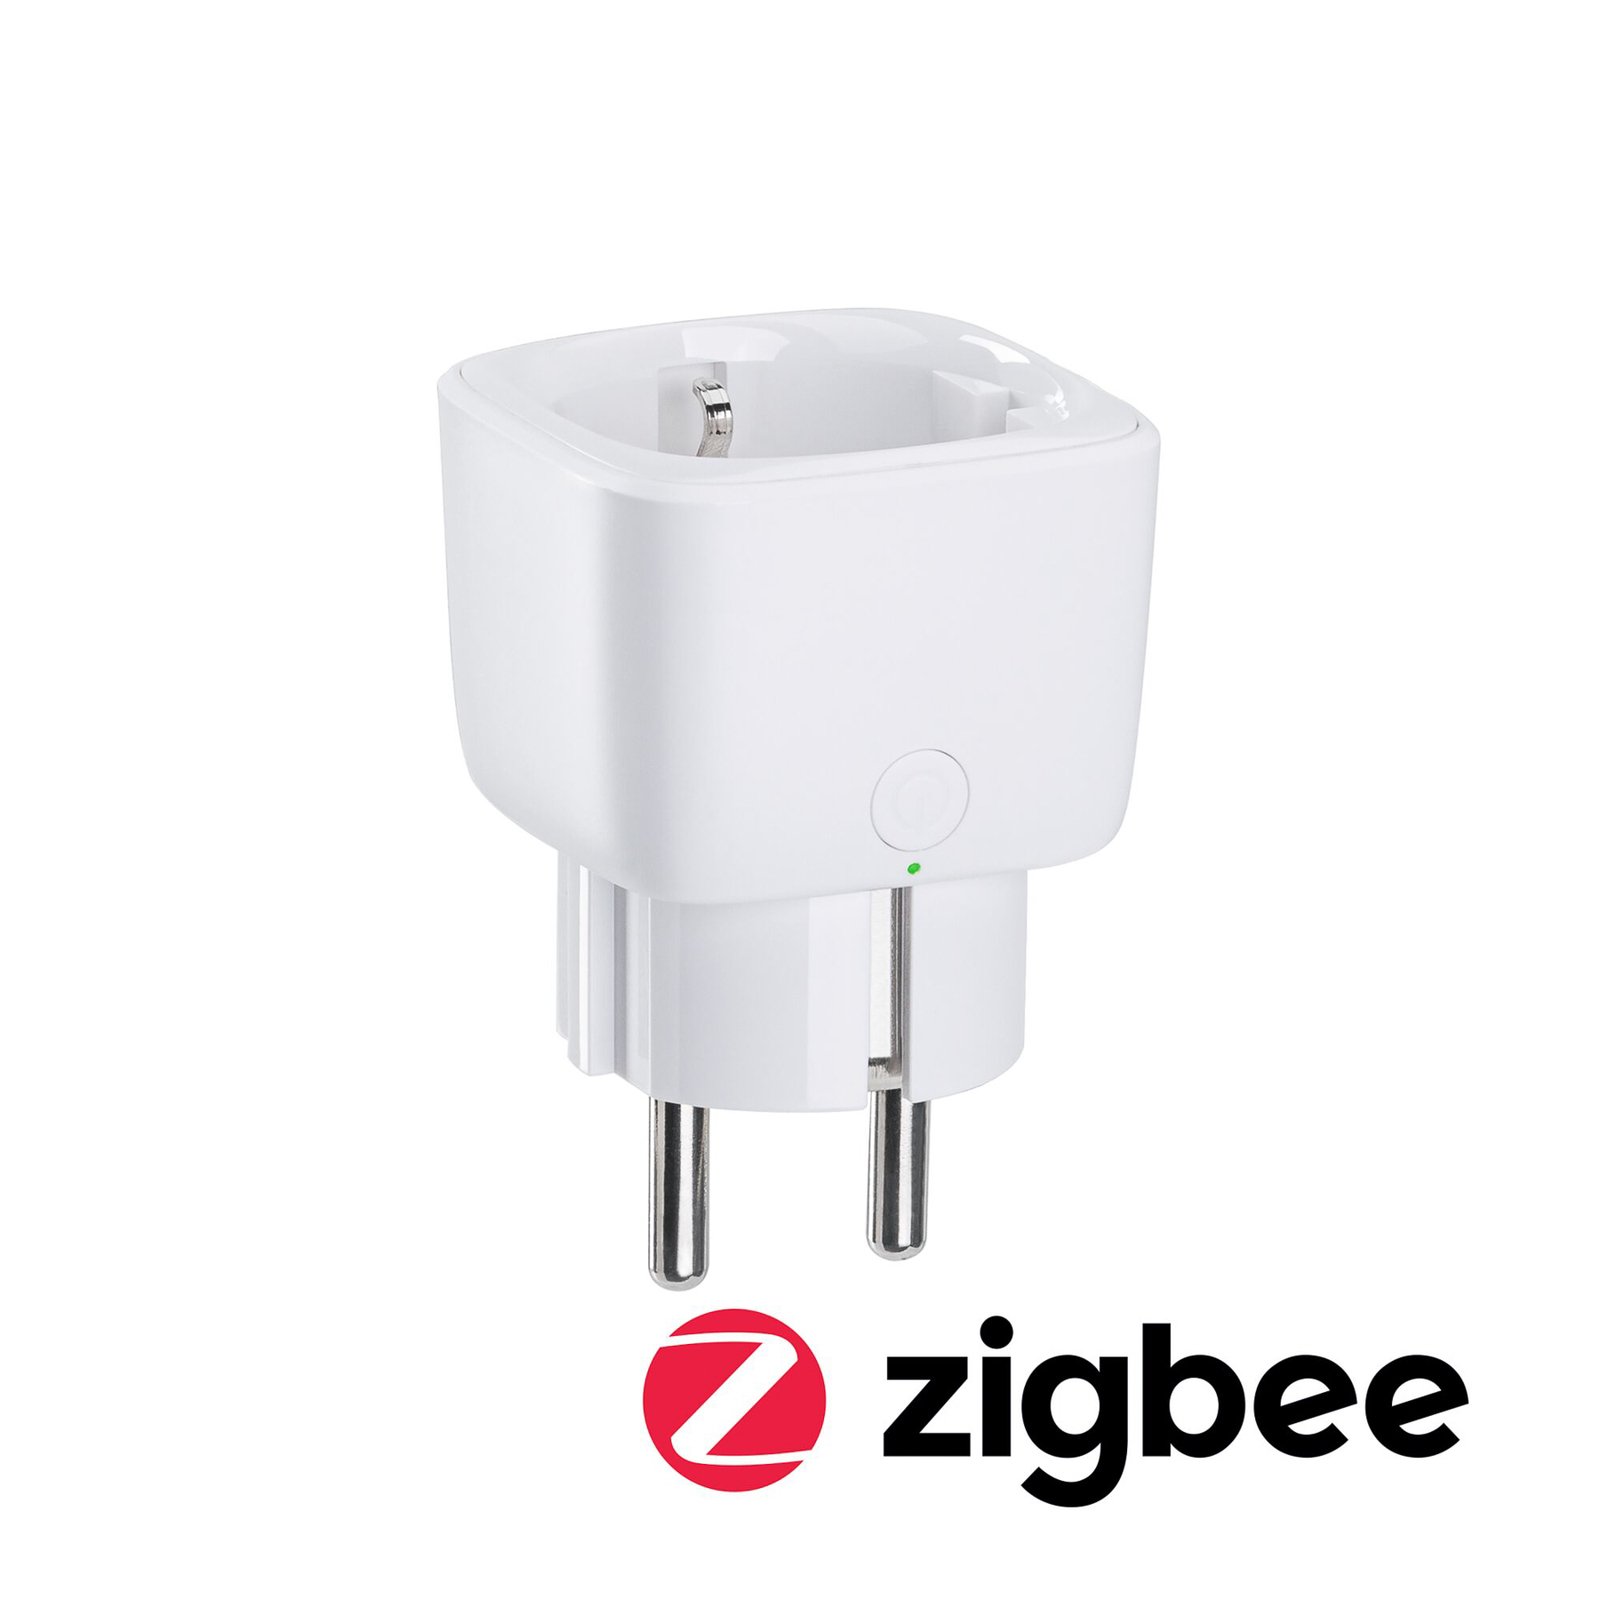 Paulmann ZigBee Smart Plug spina intermedia